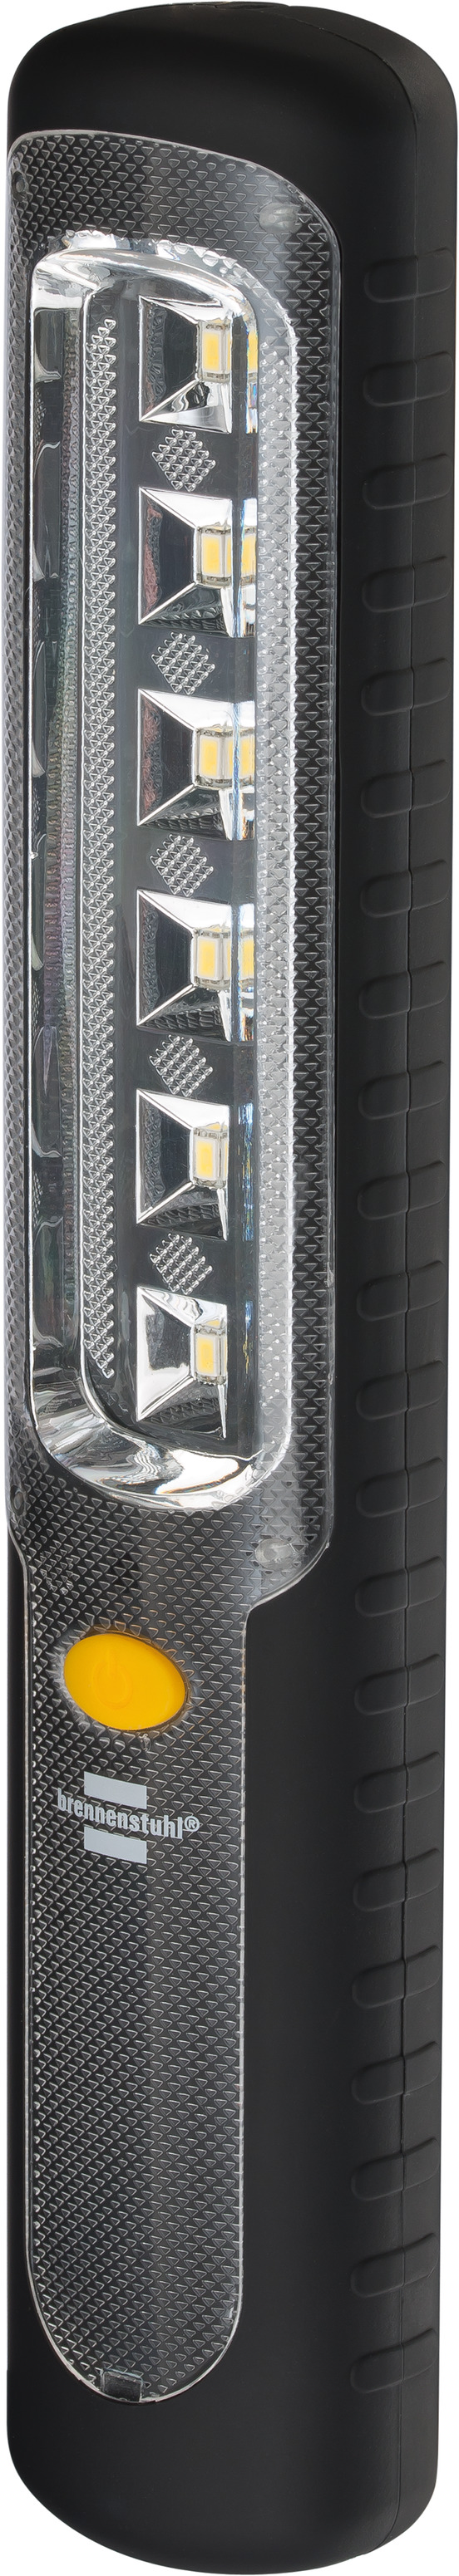 Profetie Bruin Vochtig Led-handlamp met batterij HL 300 AD 300lm, met dynamo, haak, magneet, USB |  brennenstuhl®